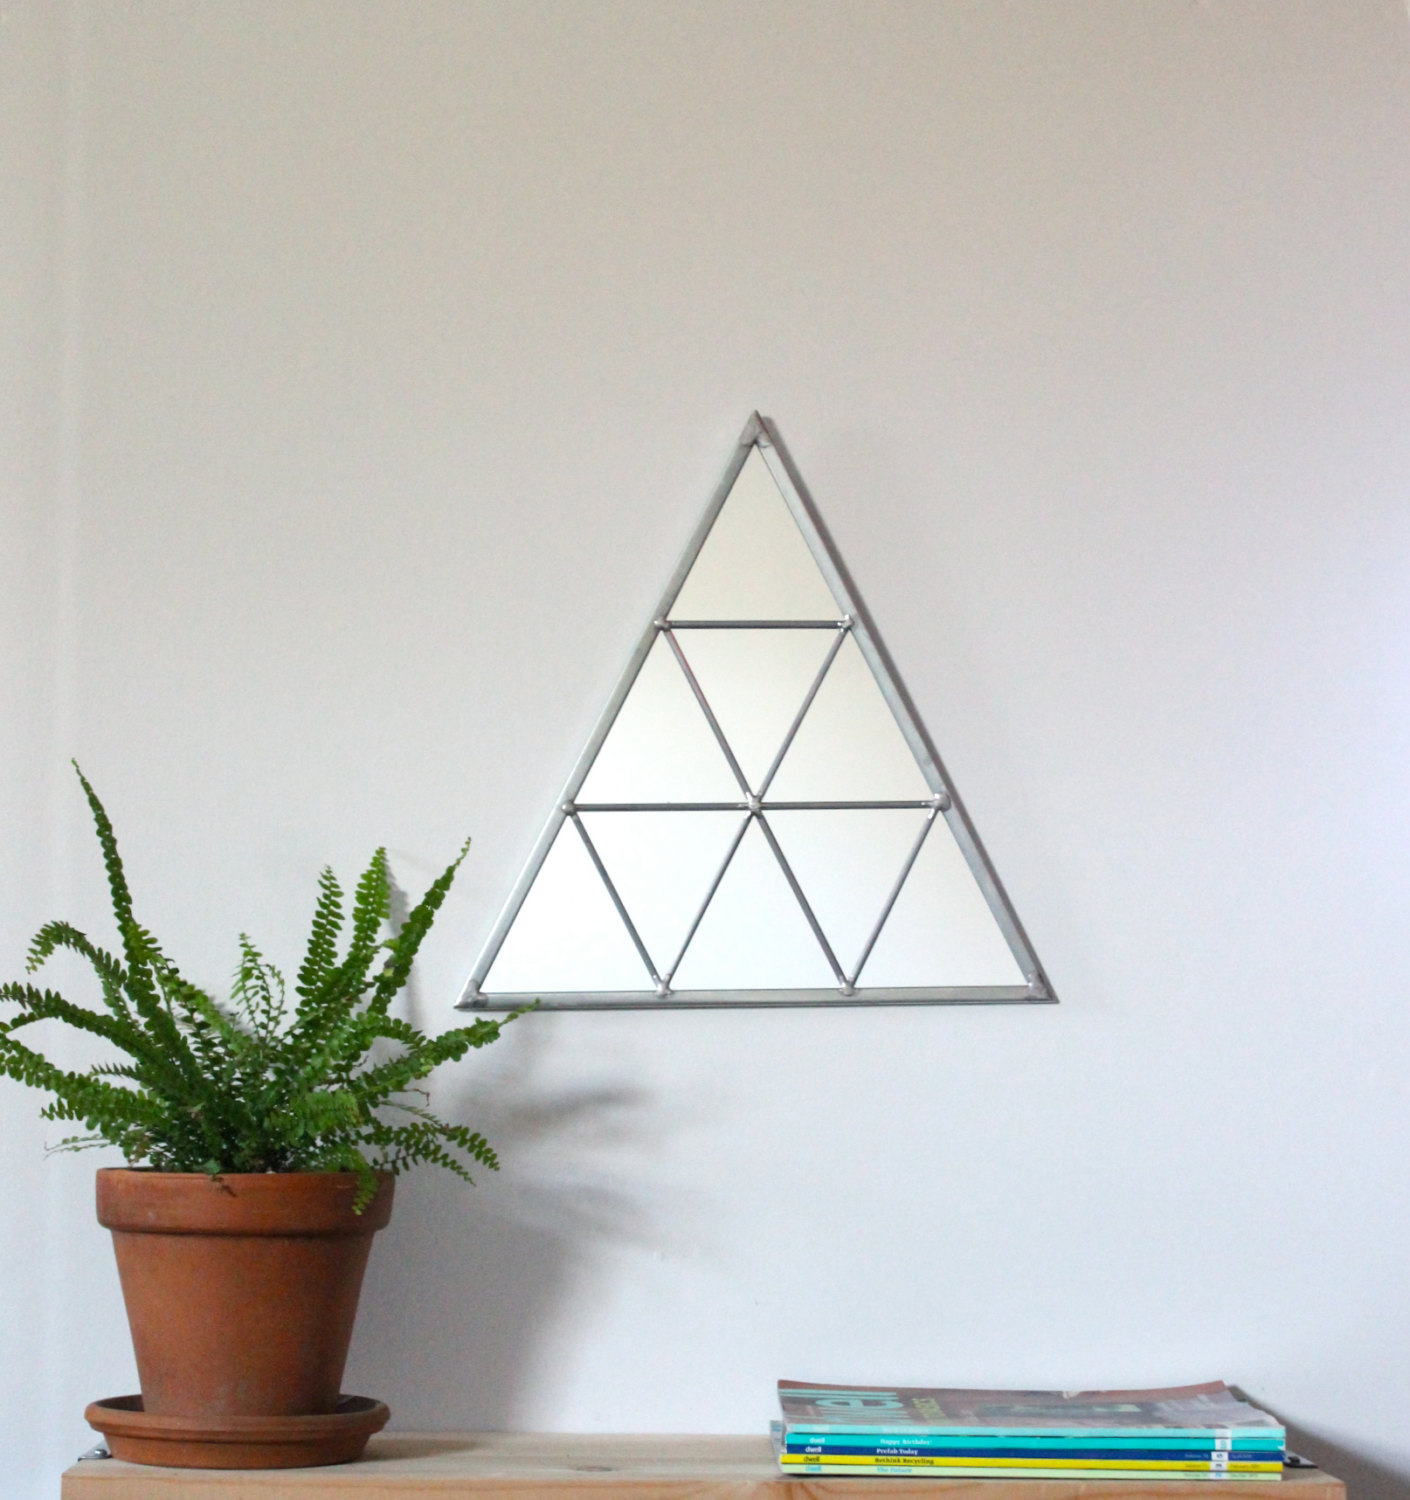 Handmade geometric wall mirror from Etsy shop Fluxglass